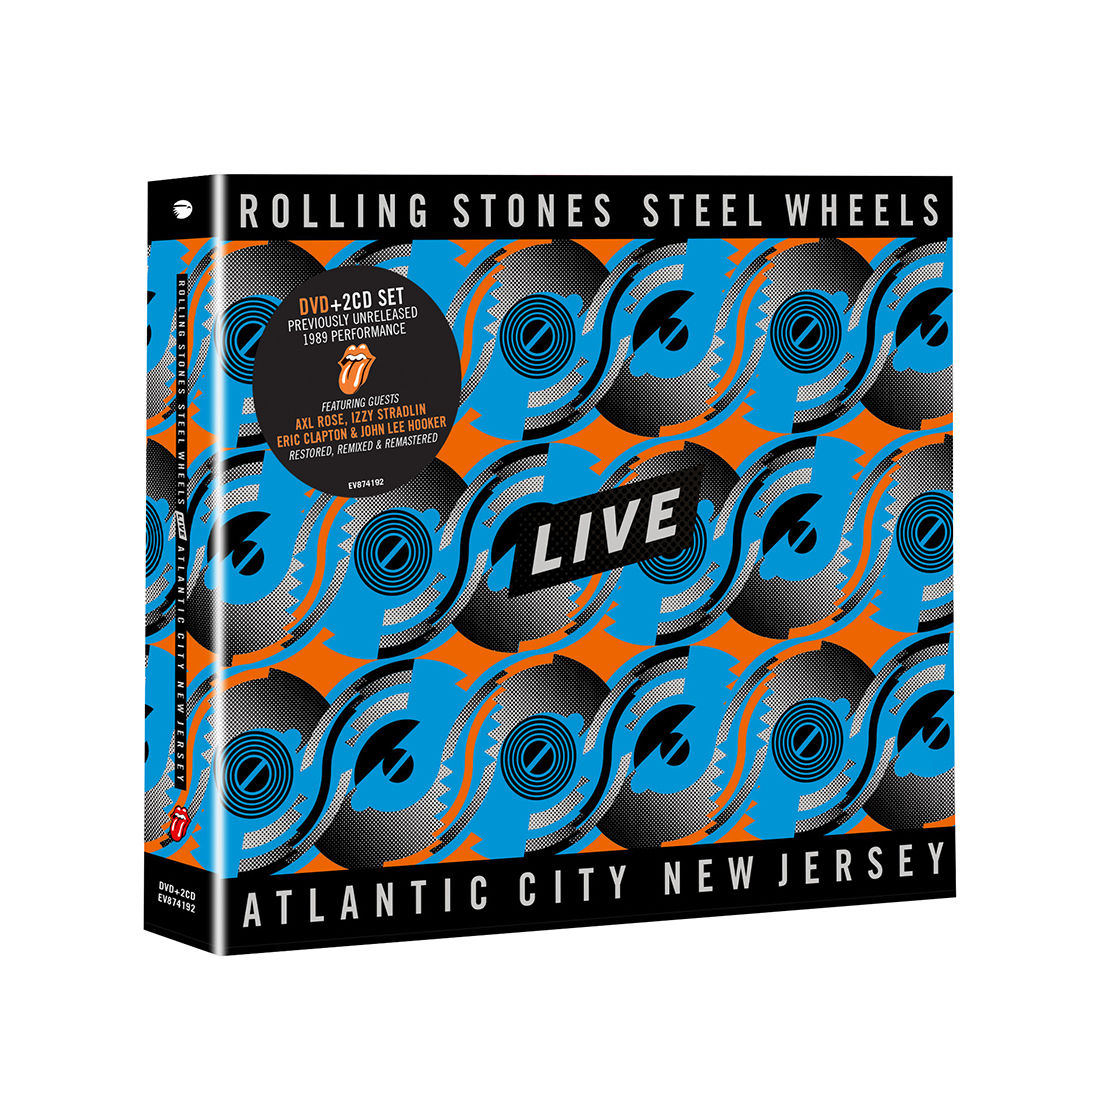 The Rolling Stones - Steel Wheels Live DVD + 2CD